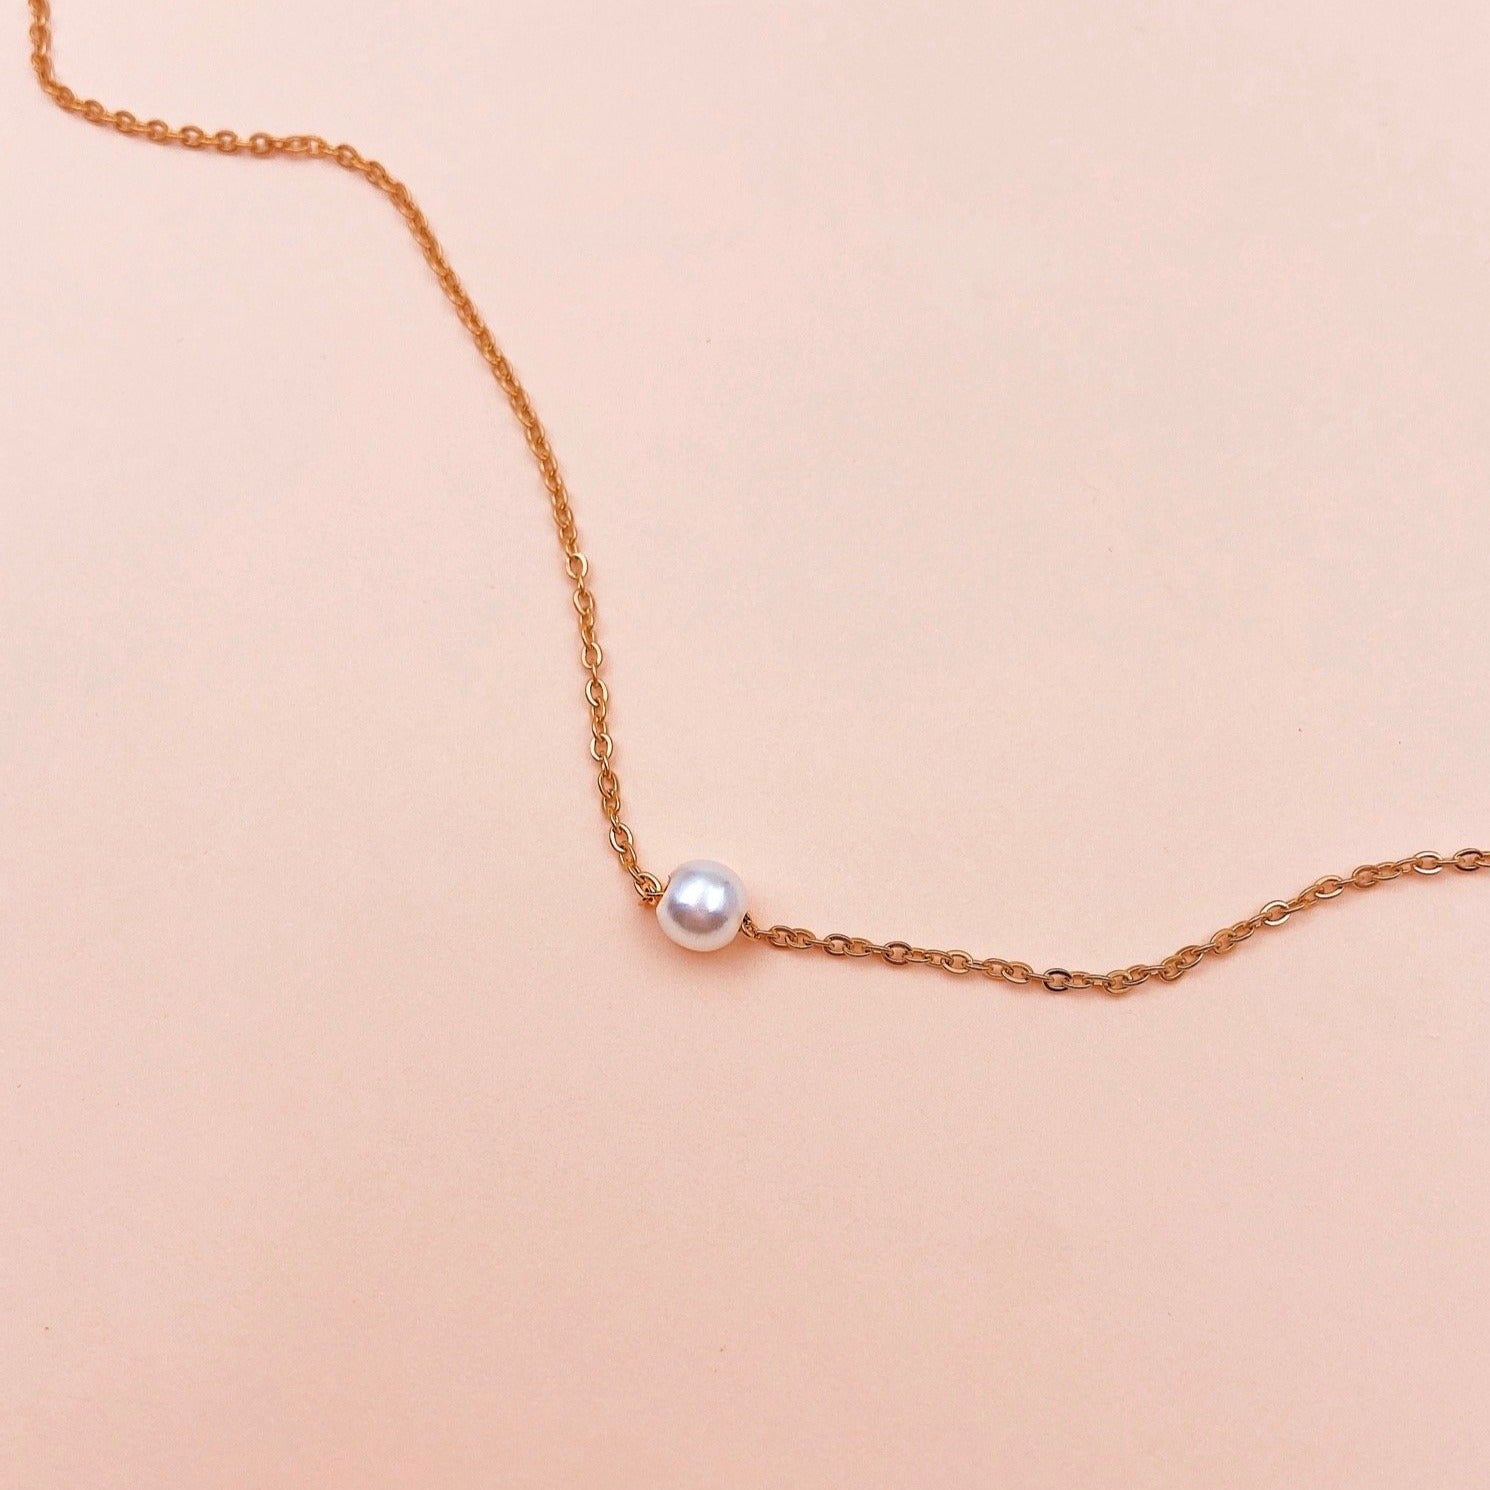 Mini Faux Pearl Necklace / Choker